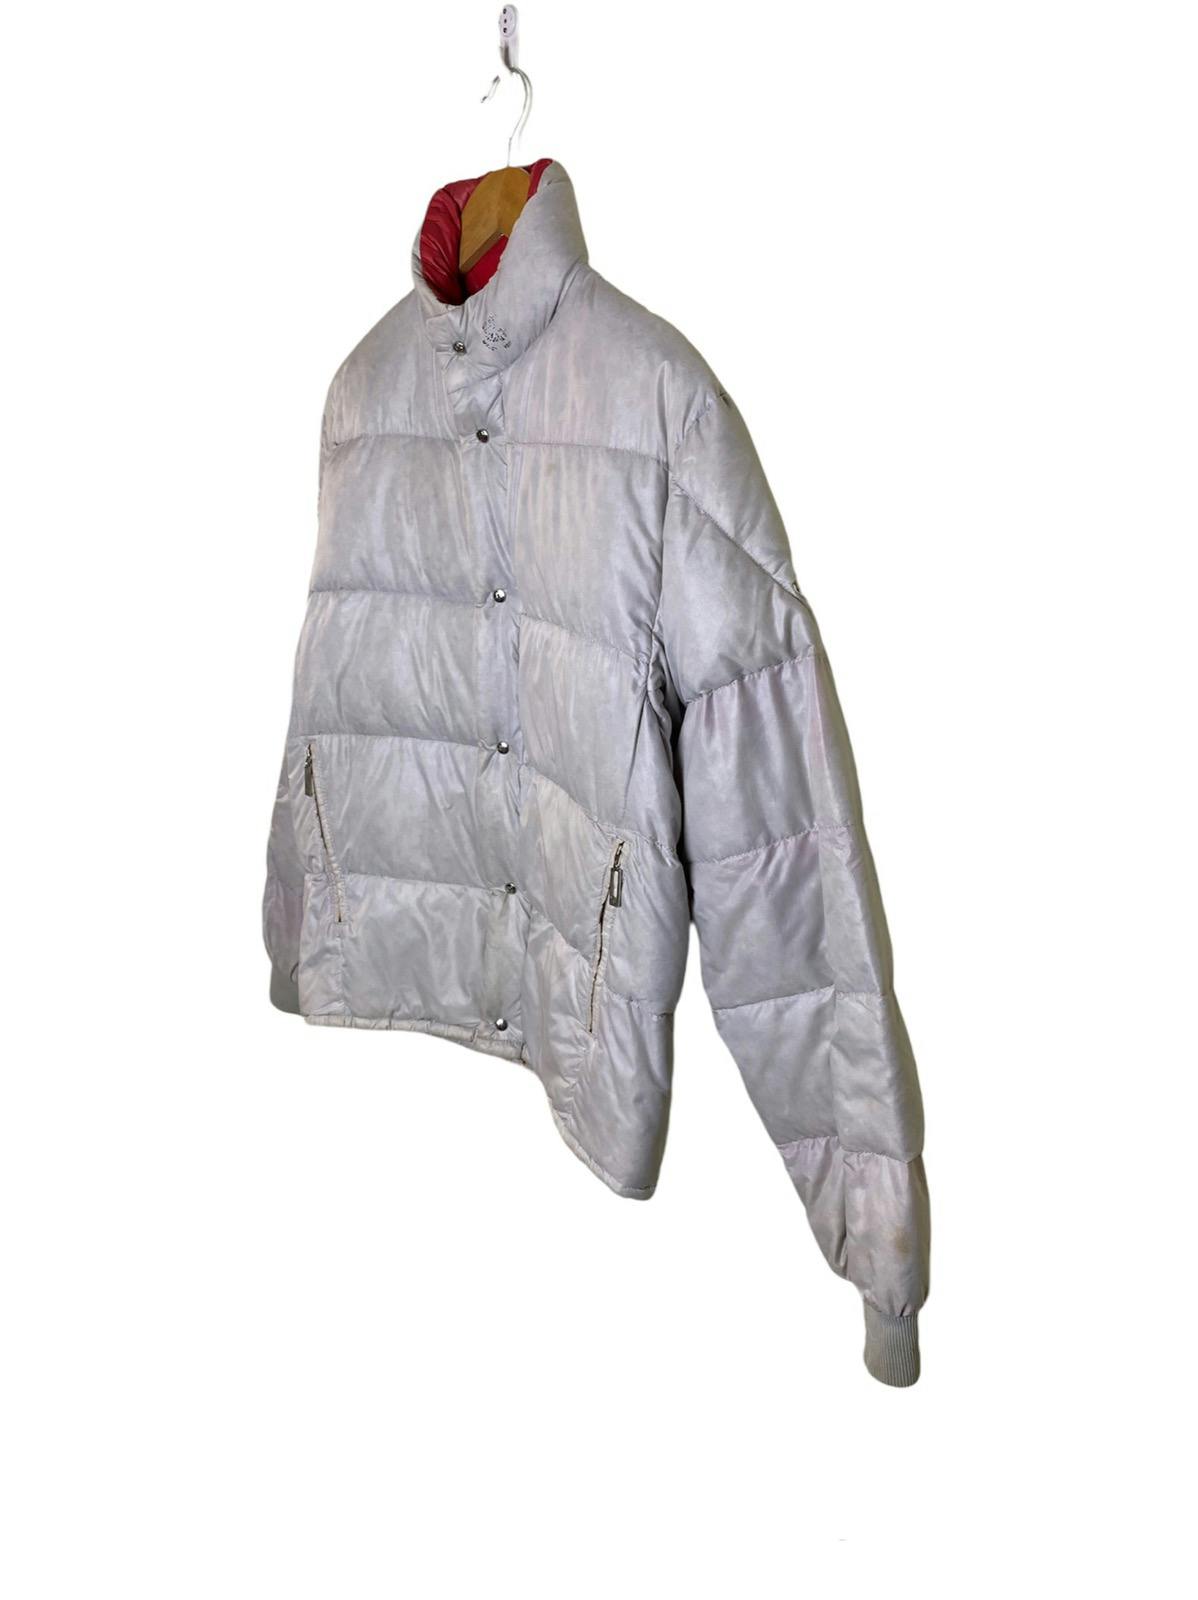 Vintage MONCLER Puffer Goose Down Winter Jacket - 9